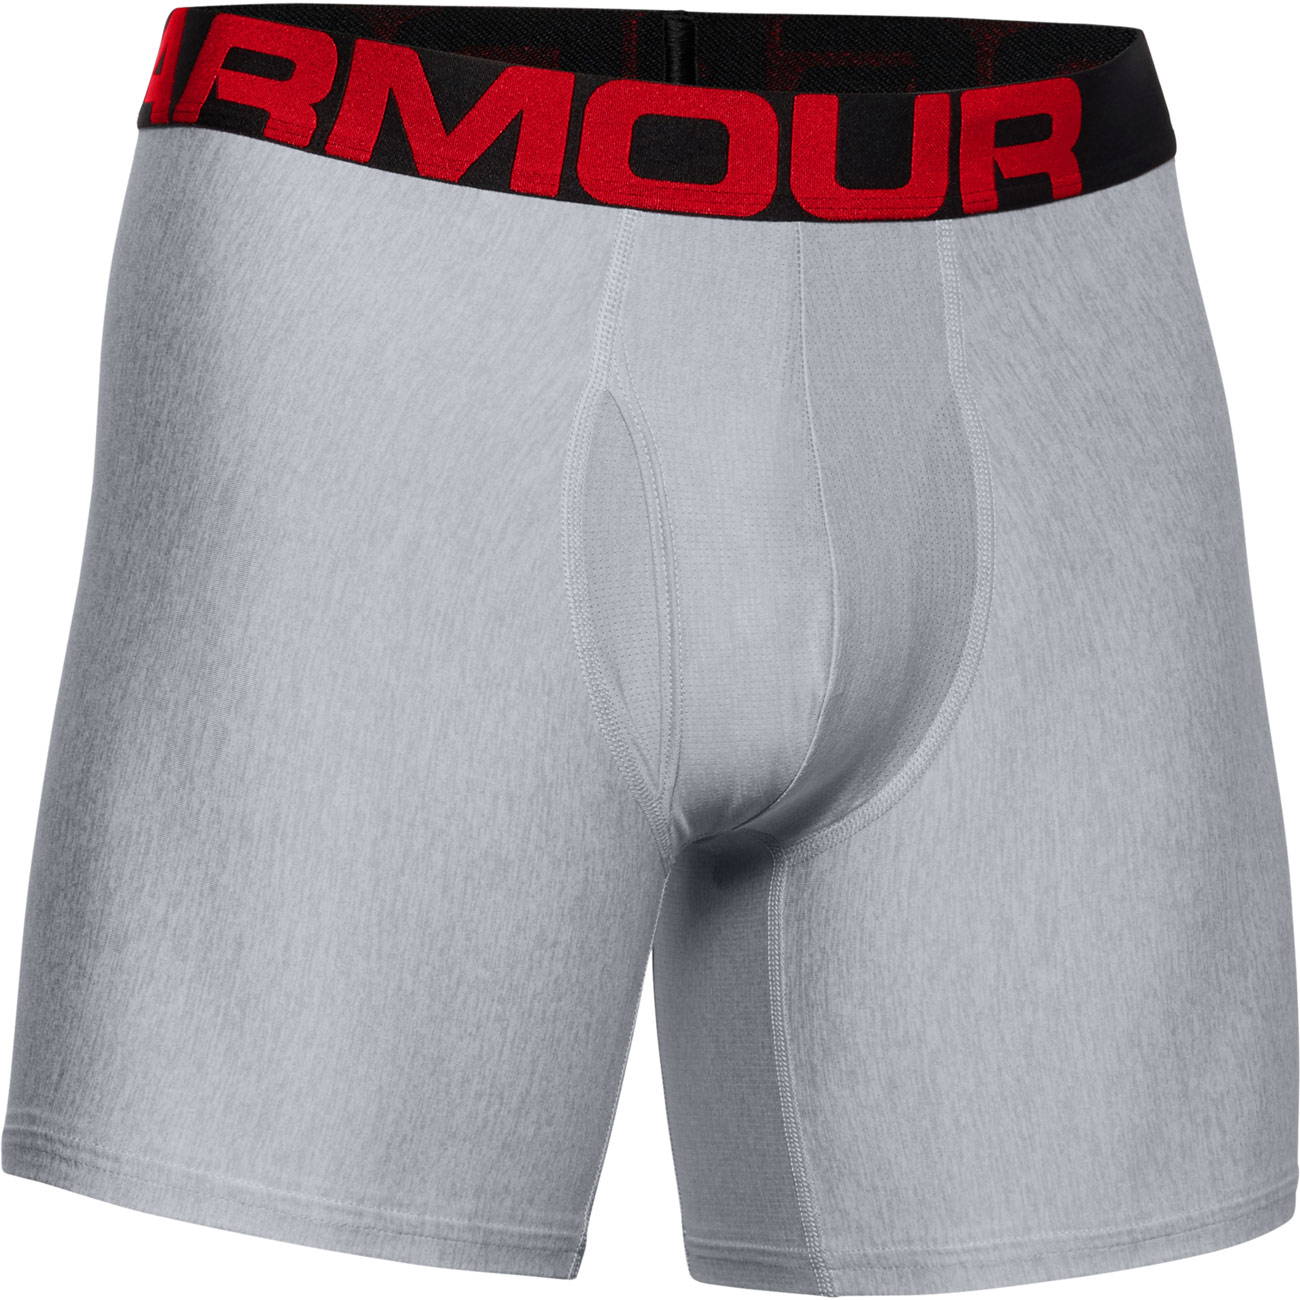 Men’s shorts